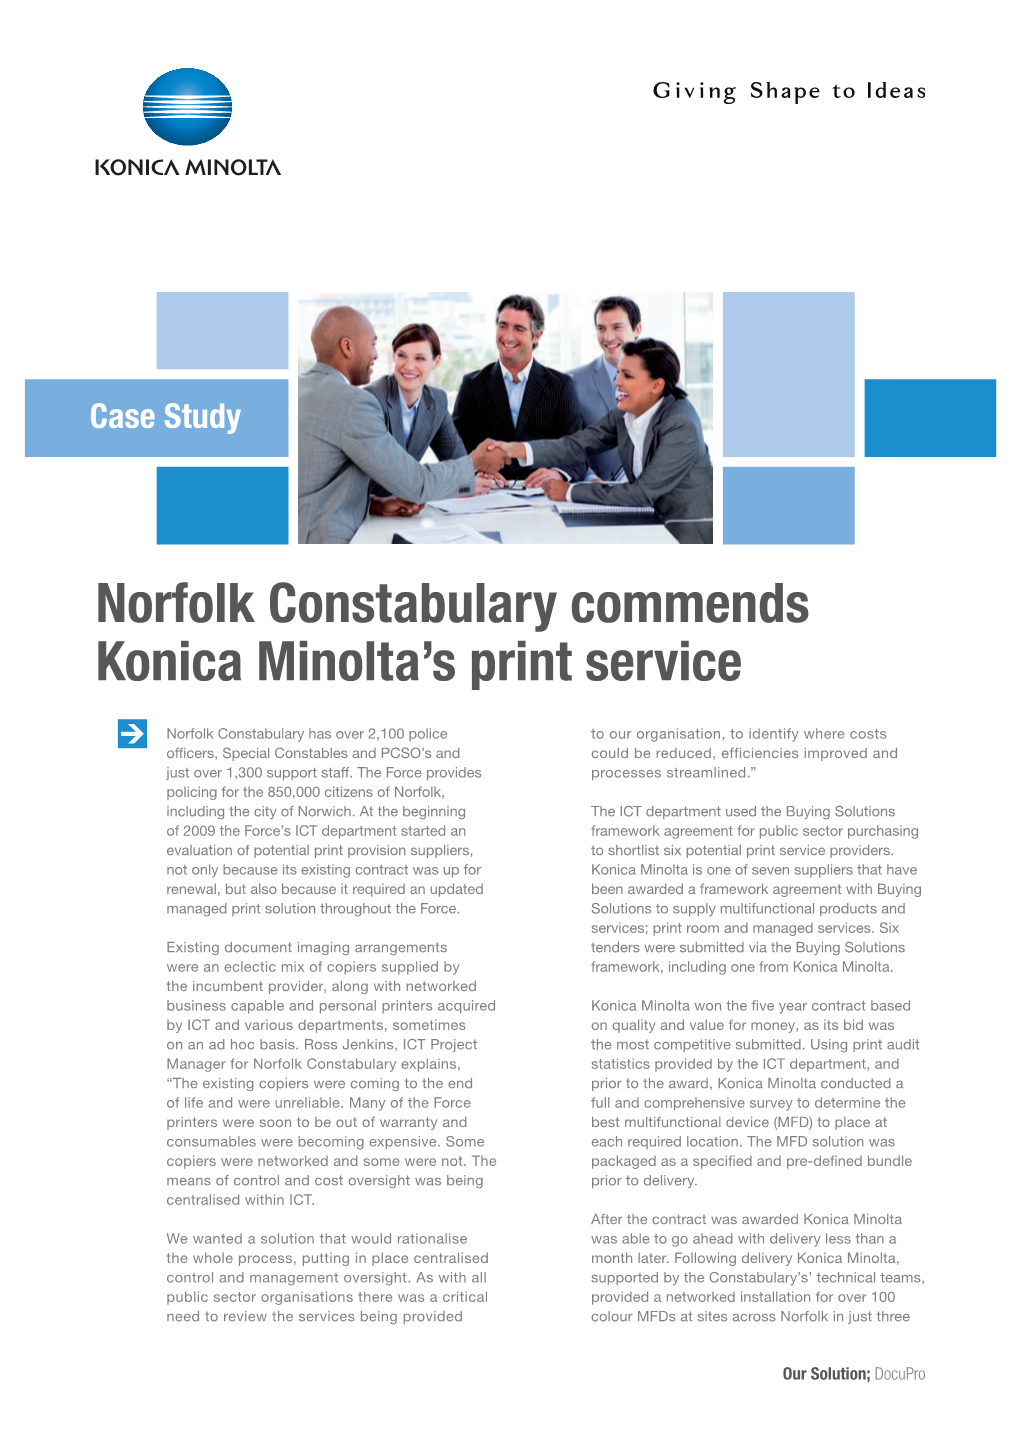 Norfolk Constabulary Commends Konica Minolta's Print Service